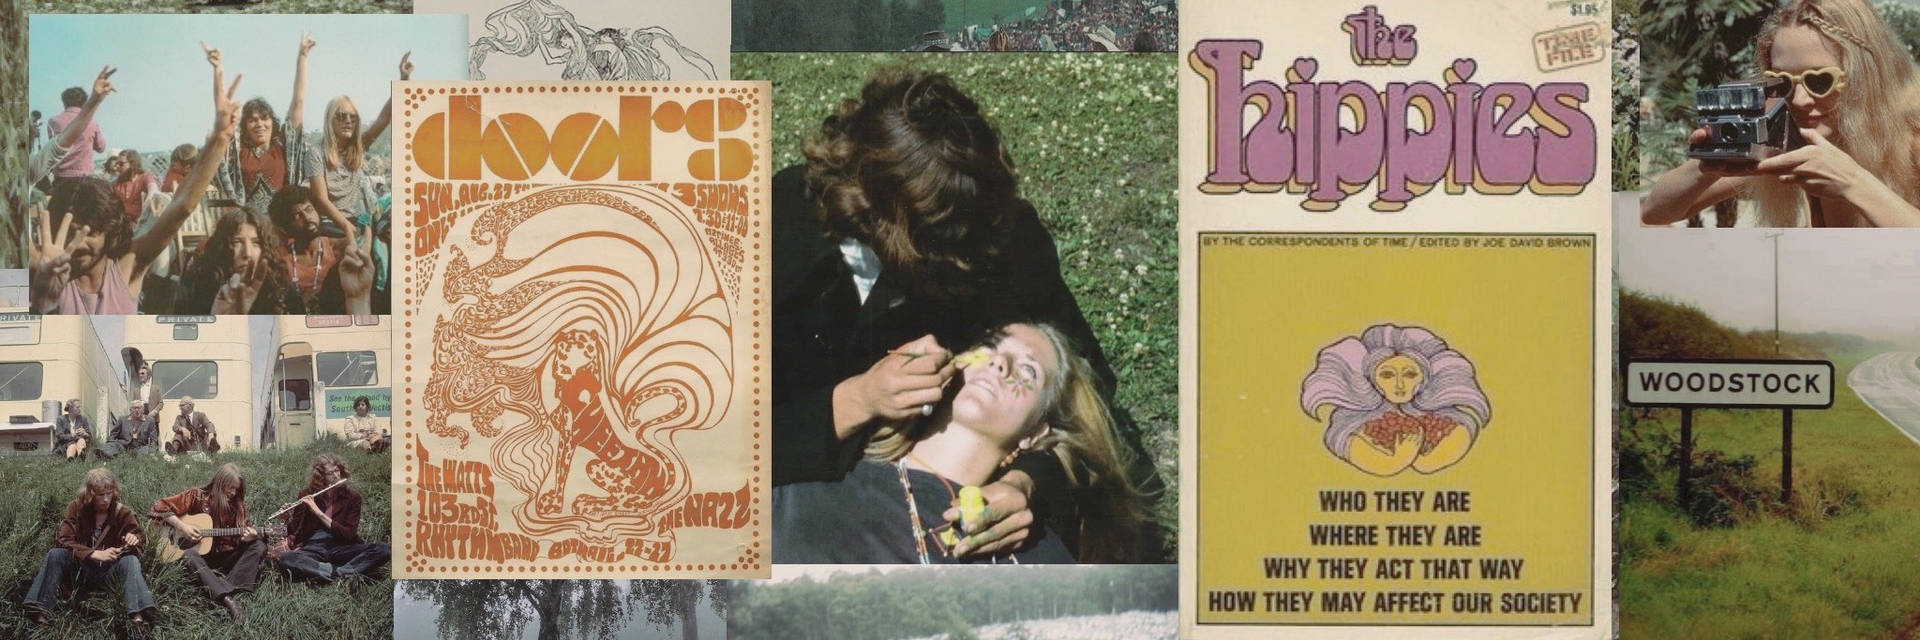 Woodstock Aesthetic Header Background